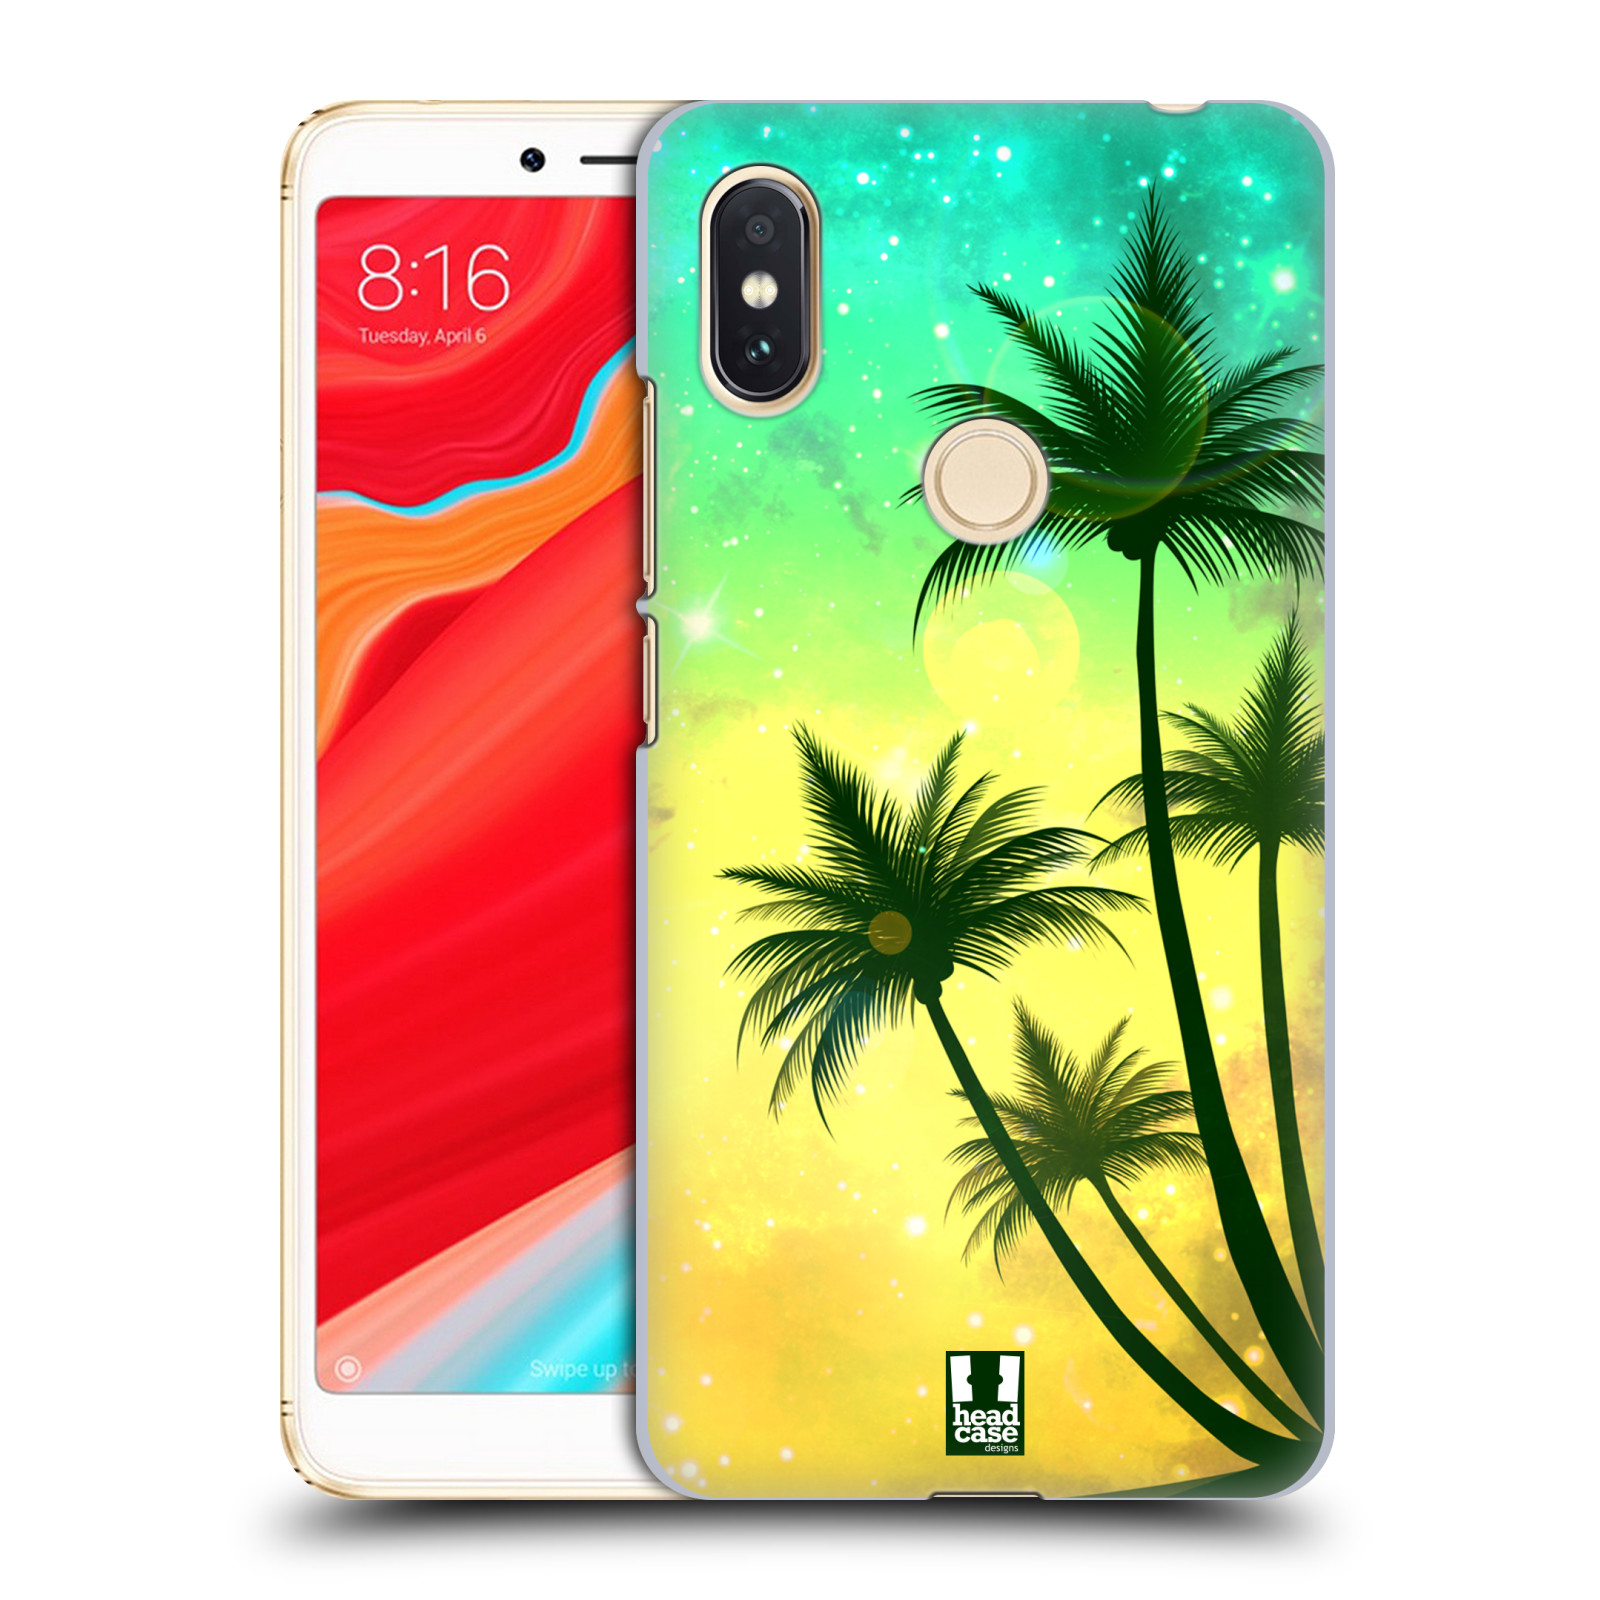 HEAD CASE plastový obal na mobil Xiaomi Redmi S2 vzor Kreslený motiv silueta moře a palmy TYRKYSOVÁ